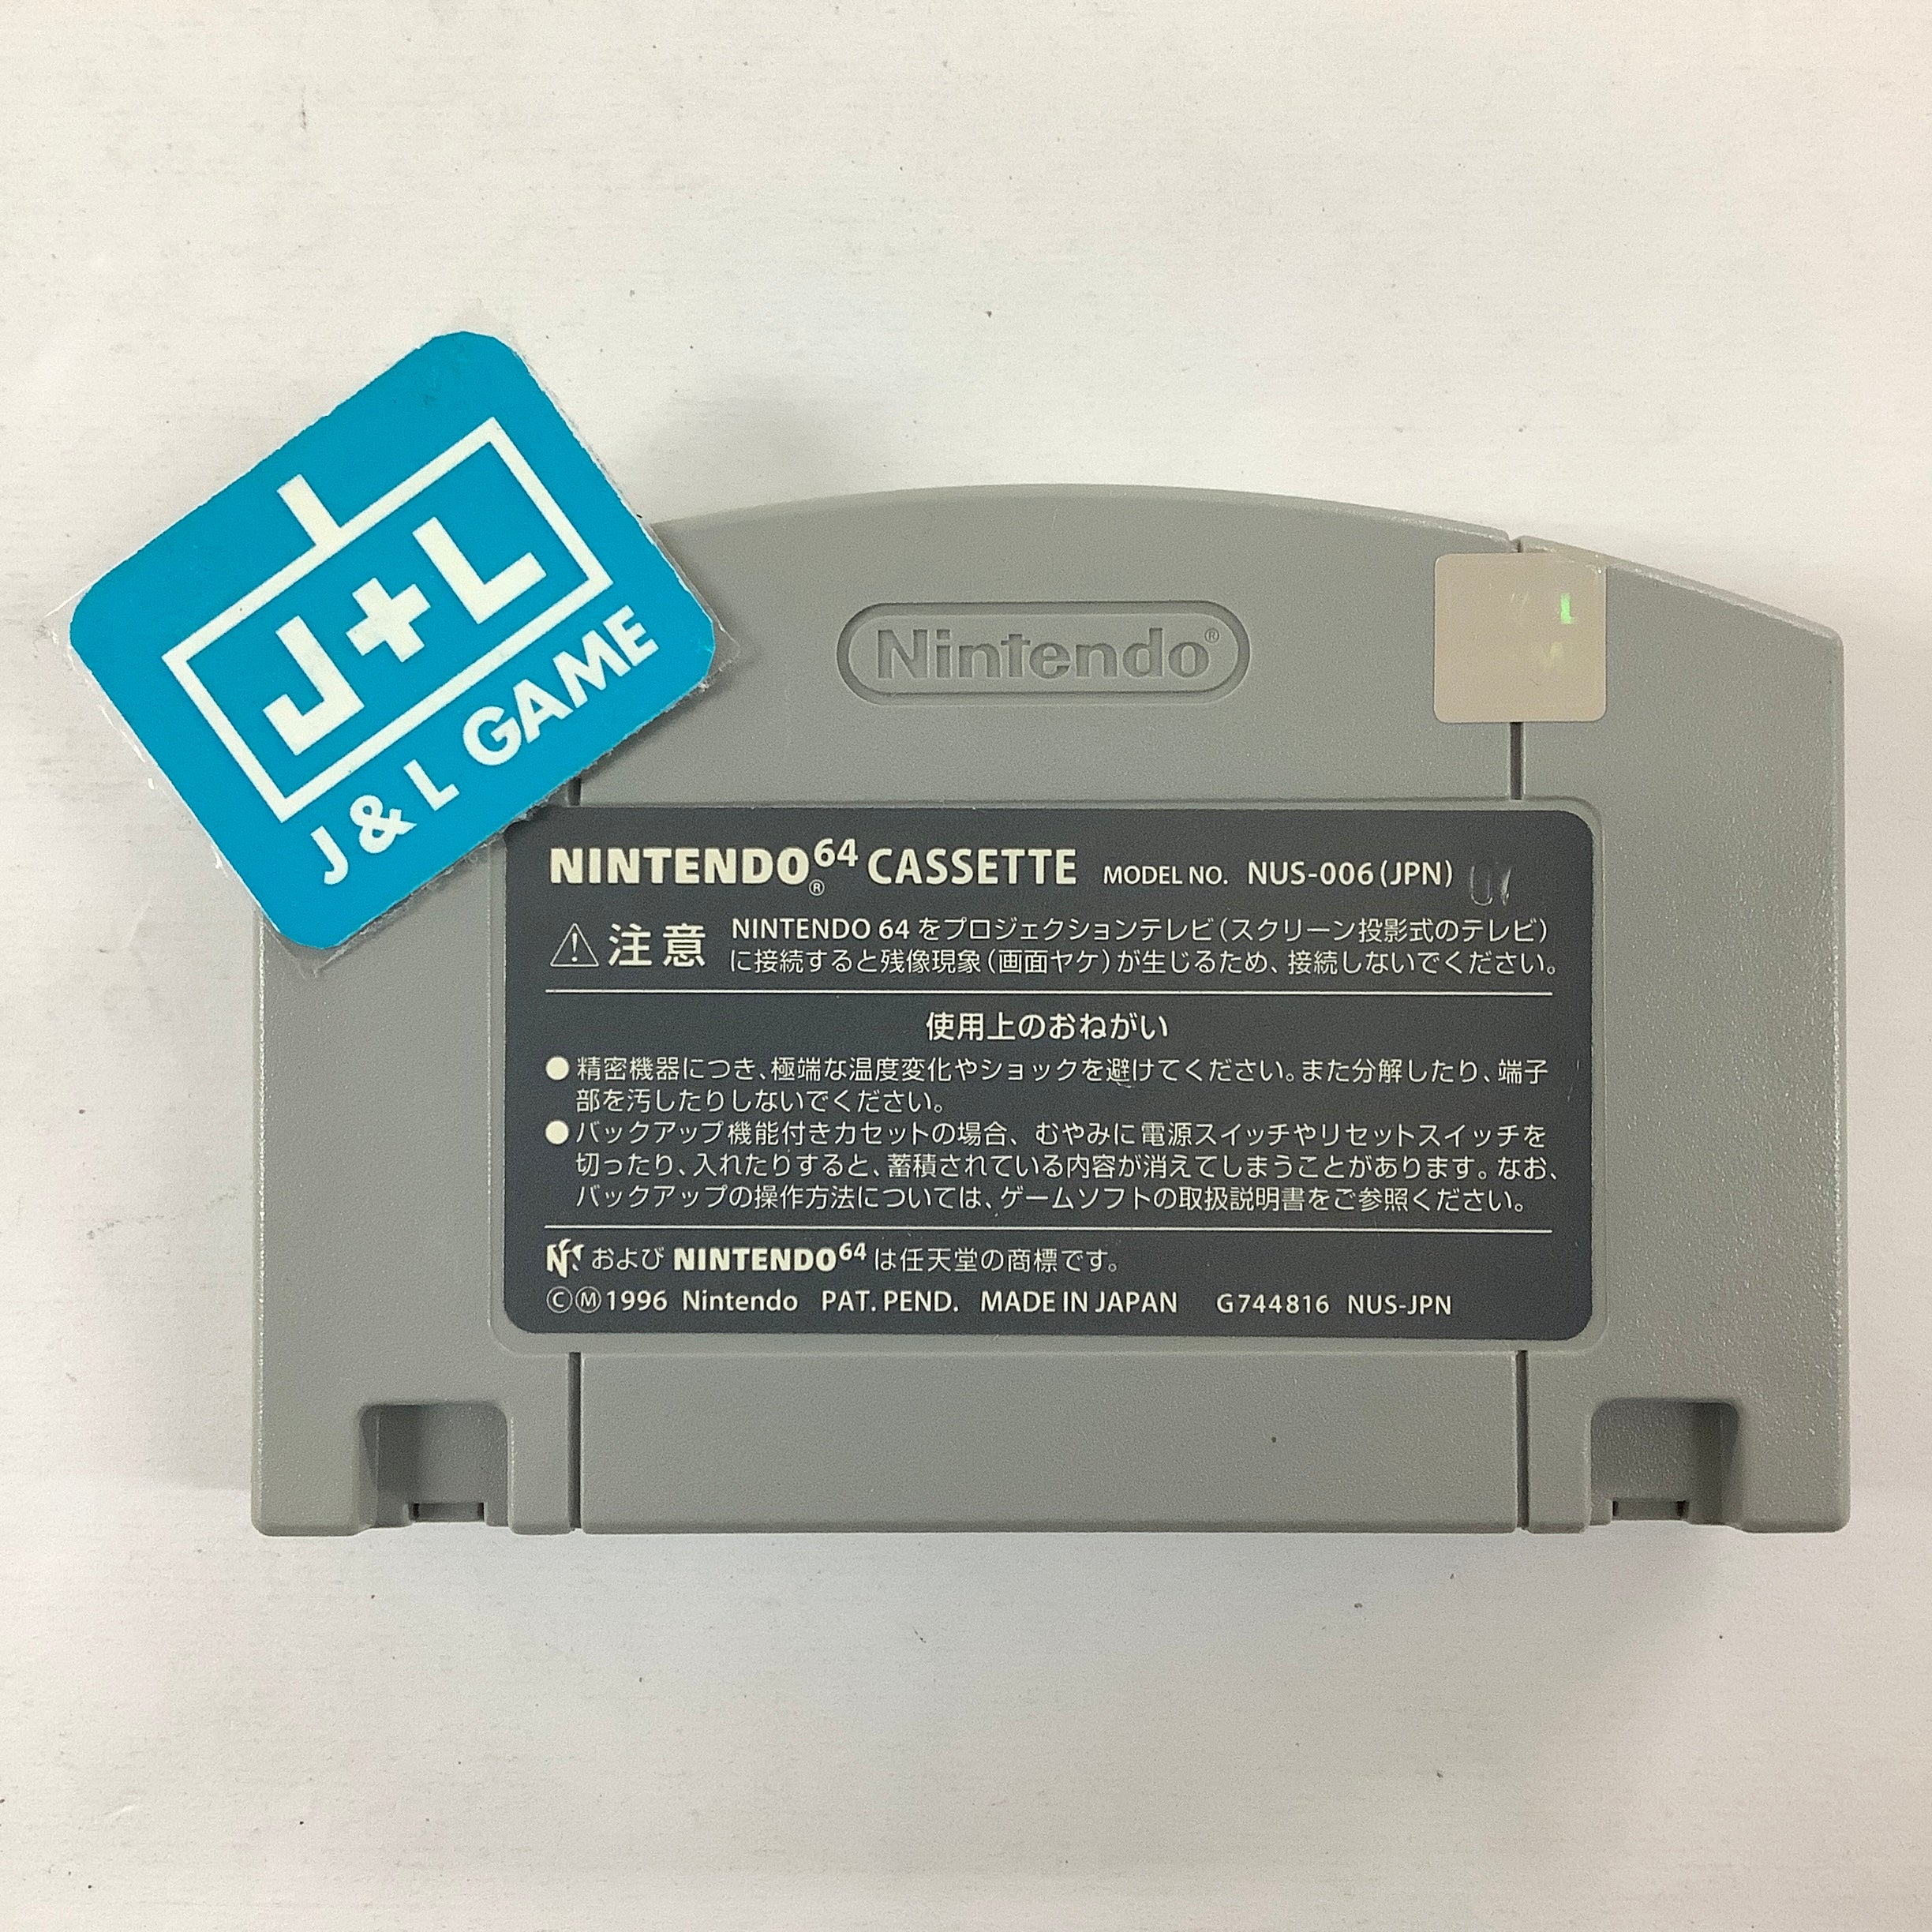 MRC: Multi-Racing Championship - (N64) Nintendo 64 [Pre-Owned] (Japanese Import) Video Games Ocean   